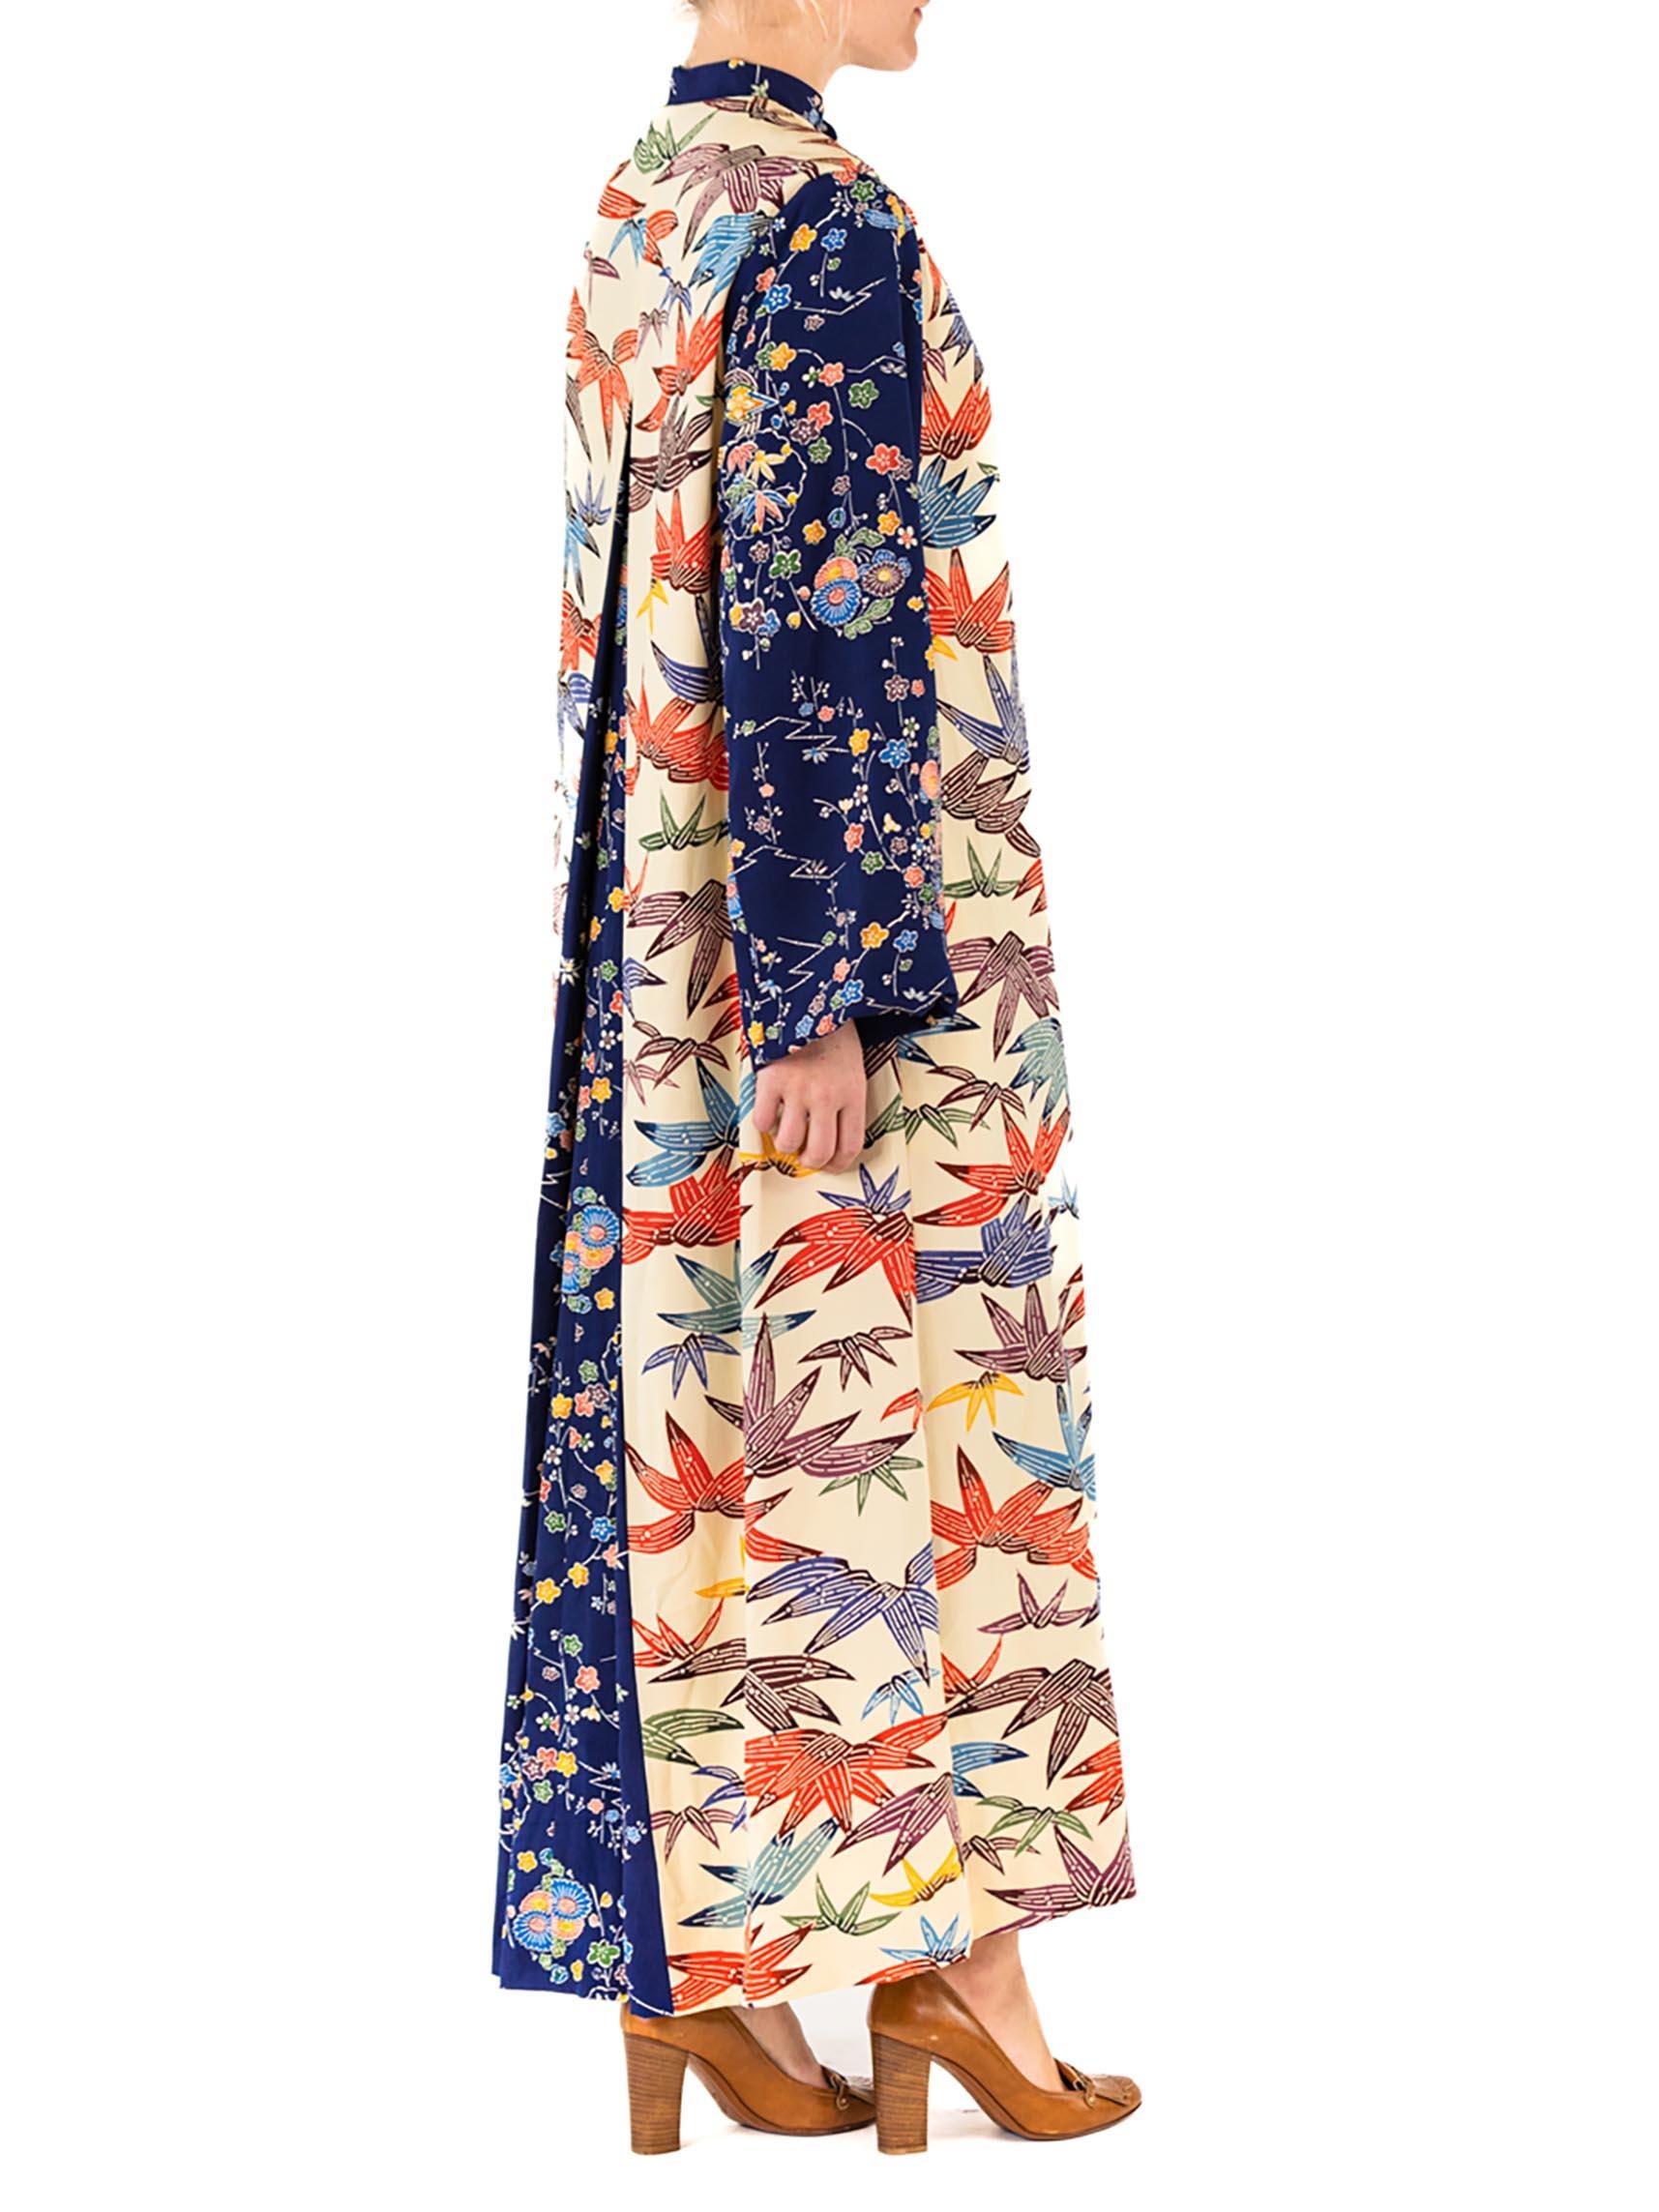 COLLECTION MORPHEW - Robe kimono multicolore en soie crème à manches bleu marine en vente 2